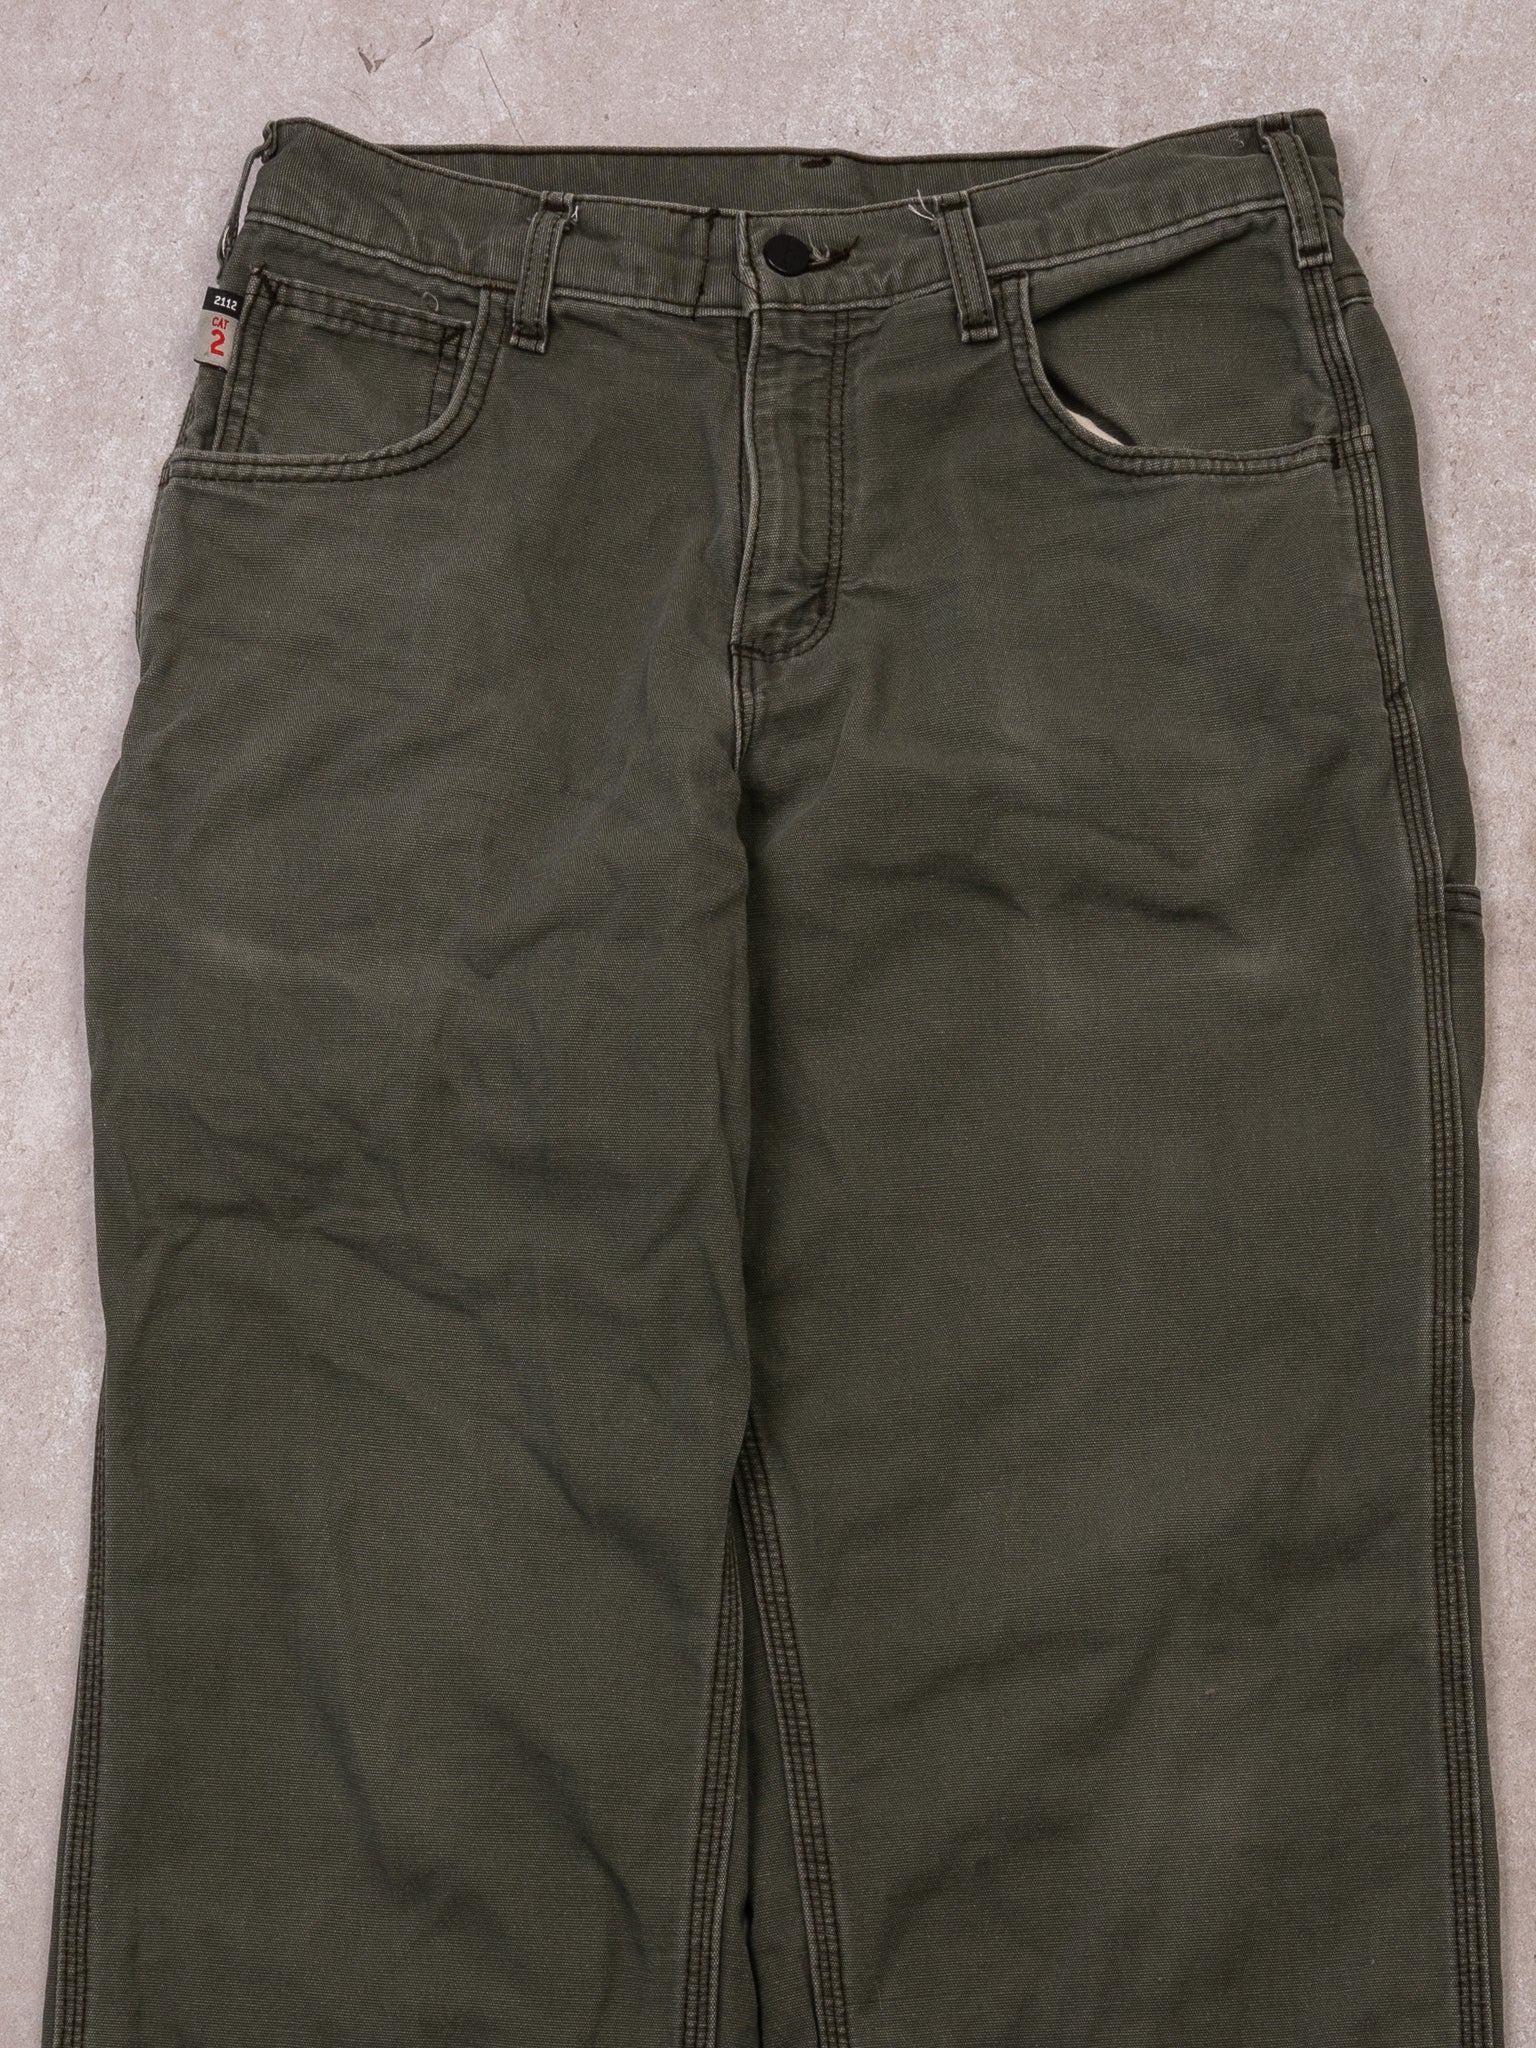 Vintage Washed Green Original Fit FR Carhartt Cargo Pants (30 x 30)